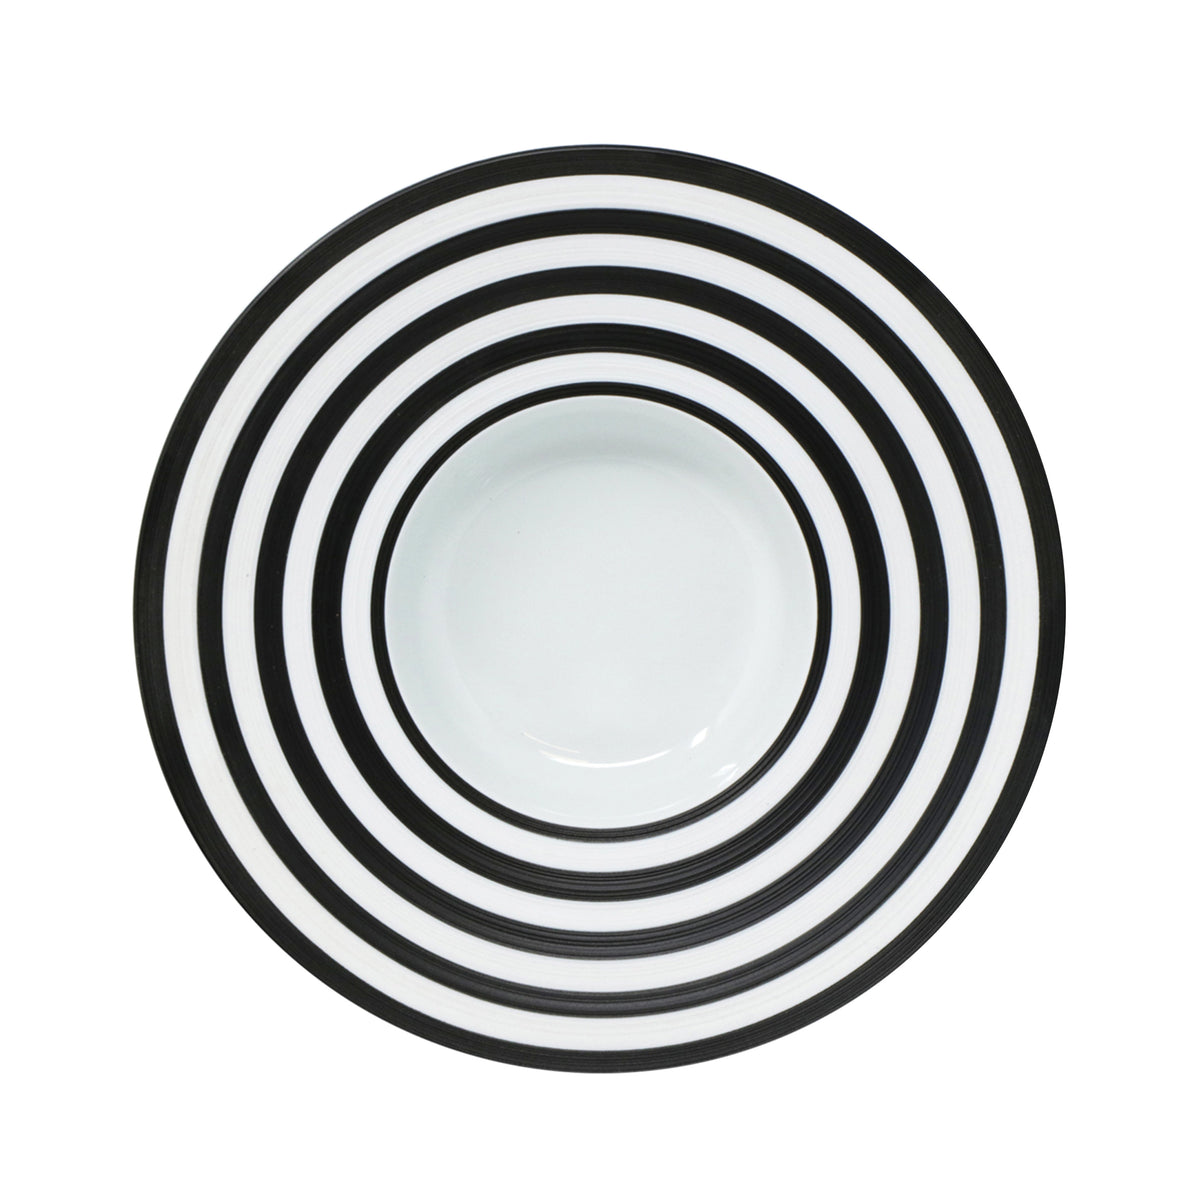 HEMISPHERE Black Striped Bakelite - Rim soup plate, large